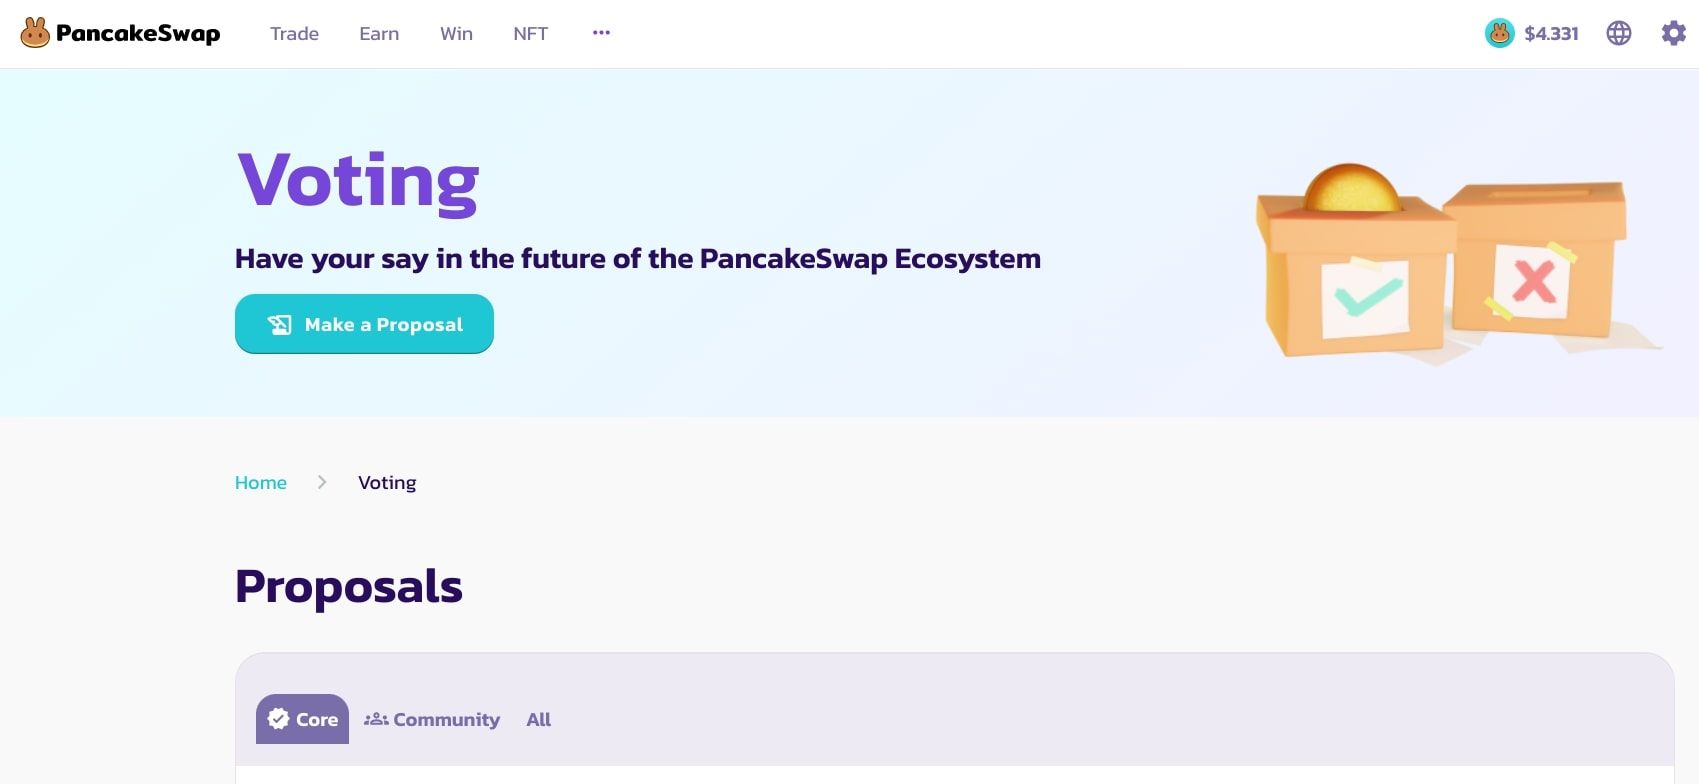 pancakeswap voting page screenshot